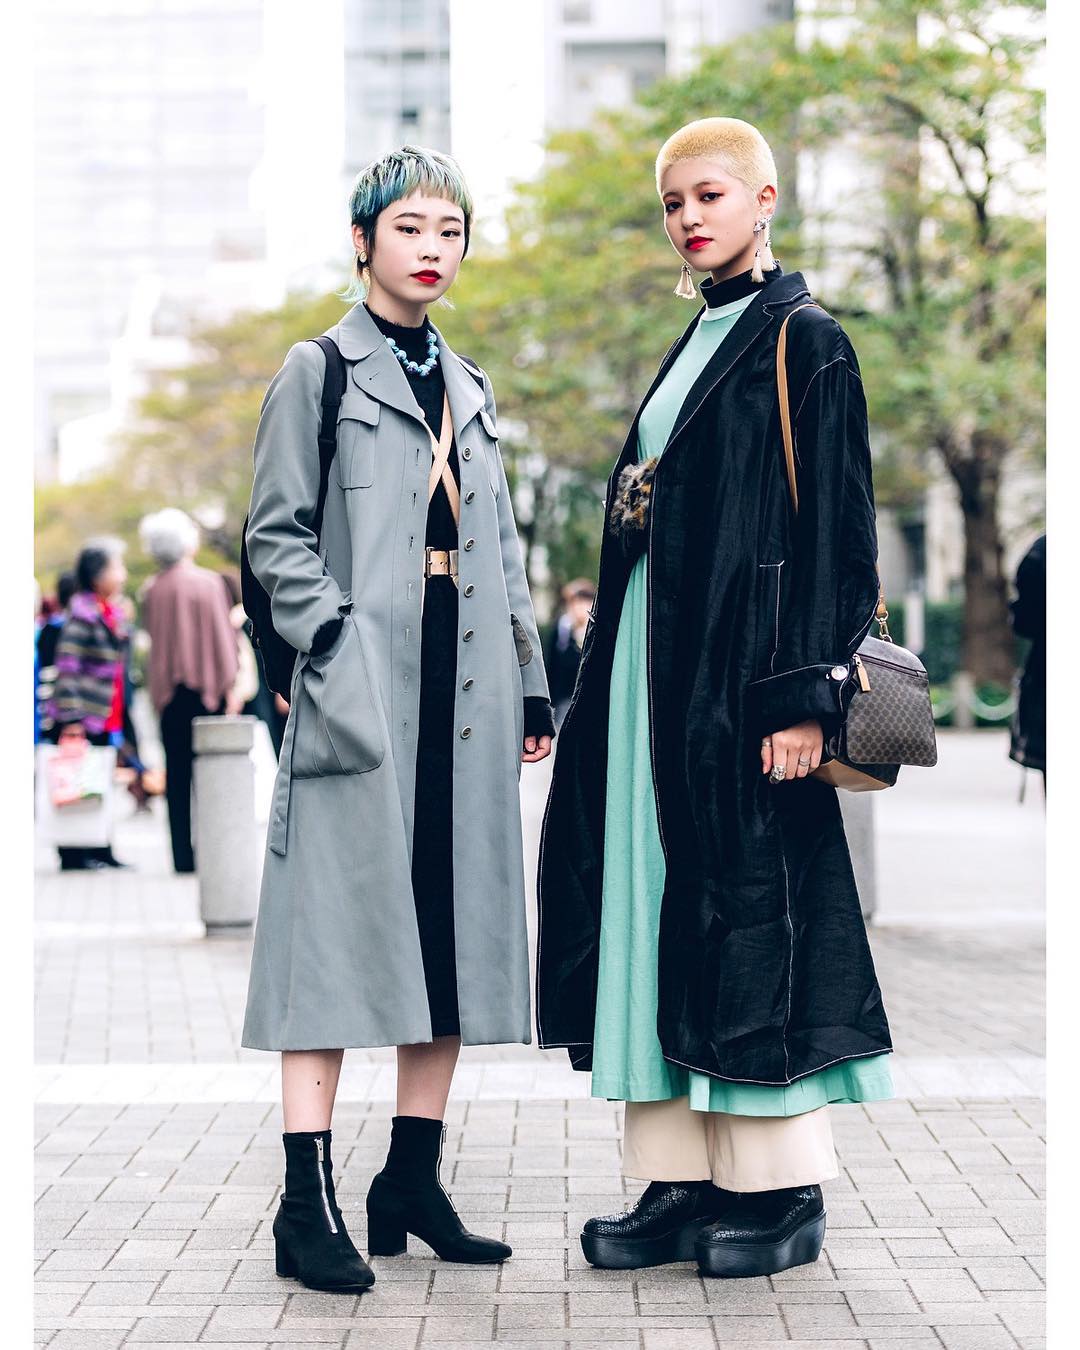 @Tokyo Fashion: Saki and Rabu (@iii_nxx) on the street in Tokyo with ...